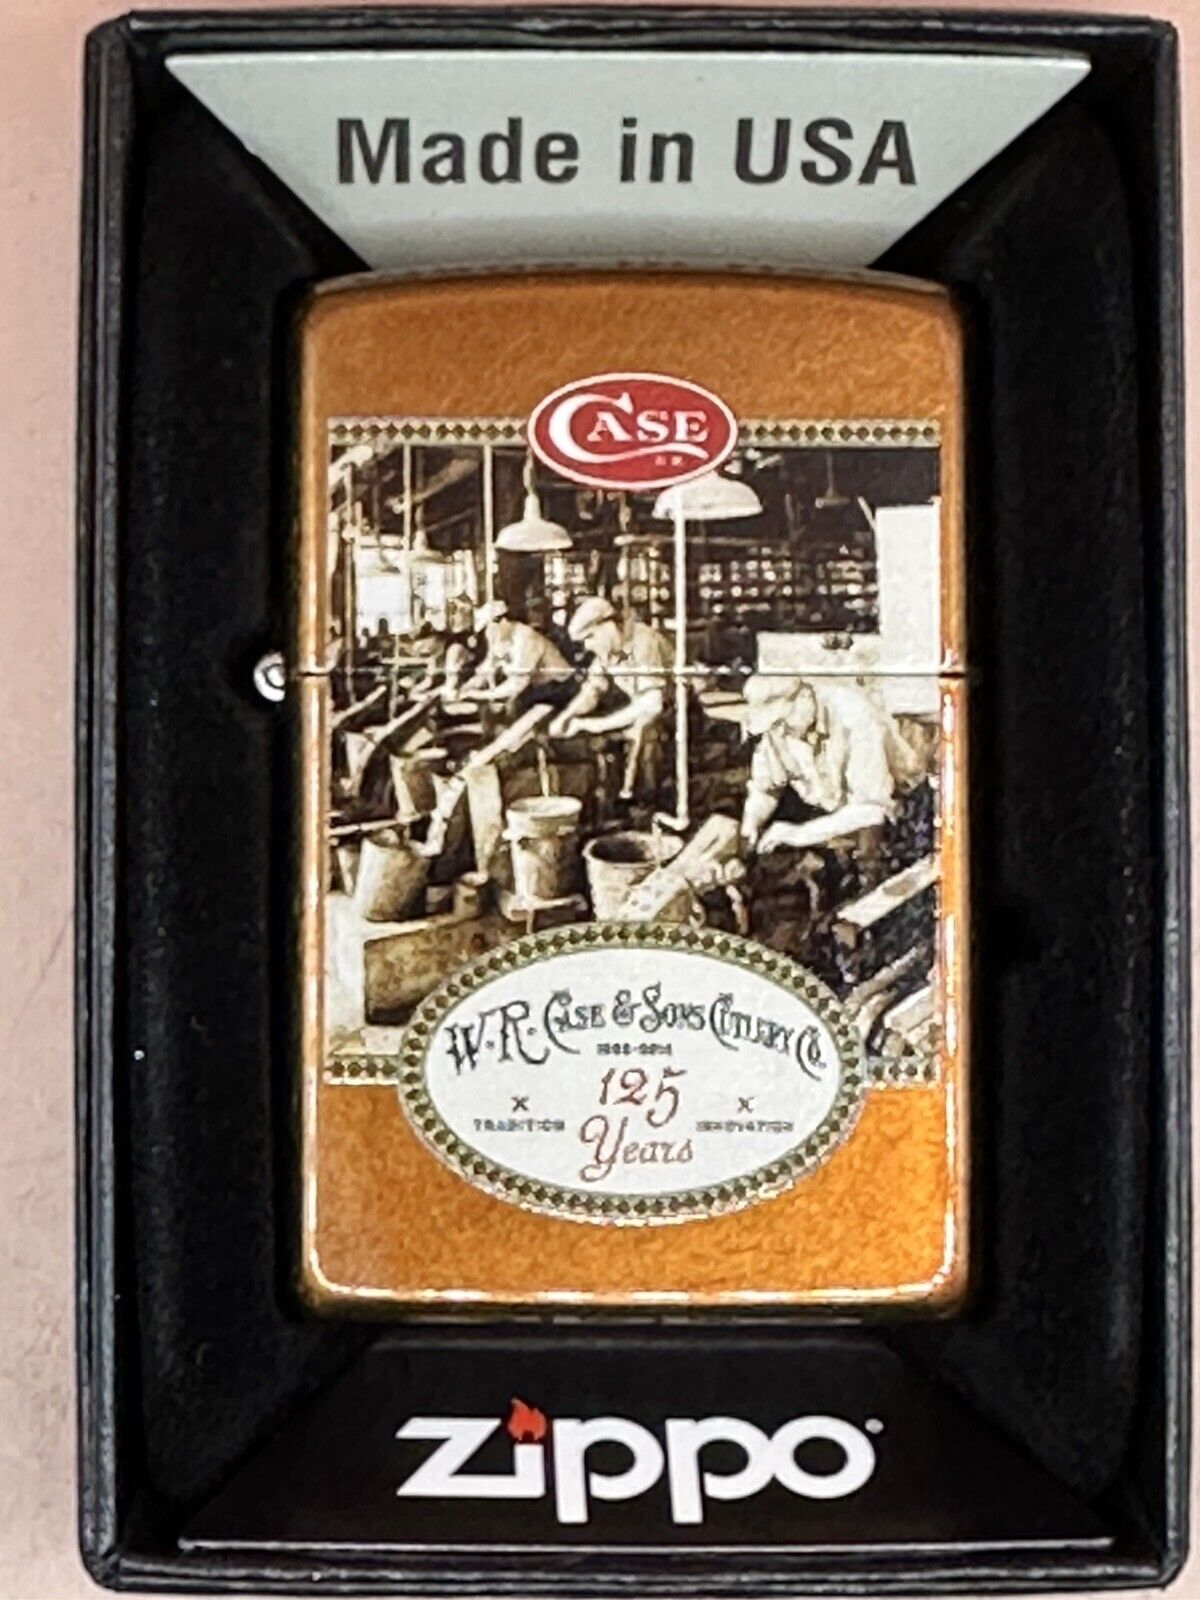 2014 Case Cutlery 125 Years Anniversary High Polish Toffee Zippo Lighter NEW